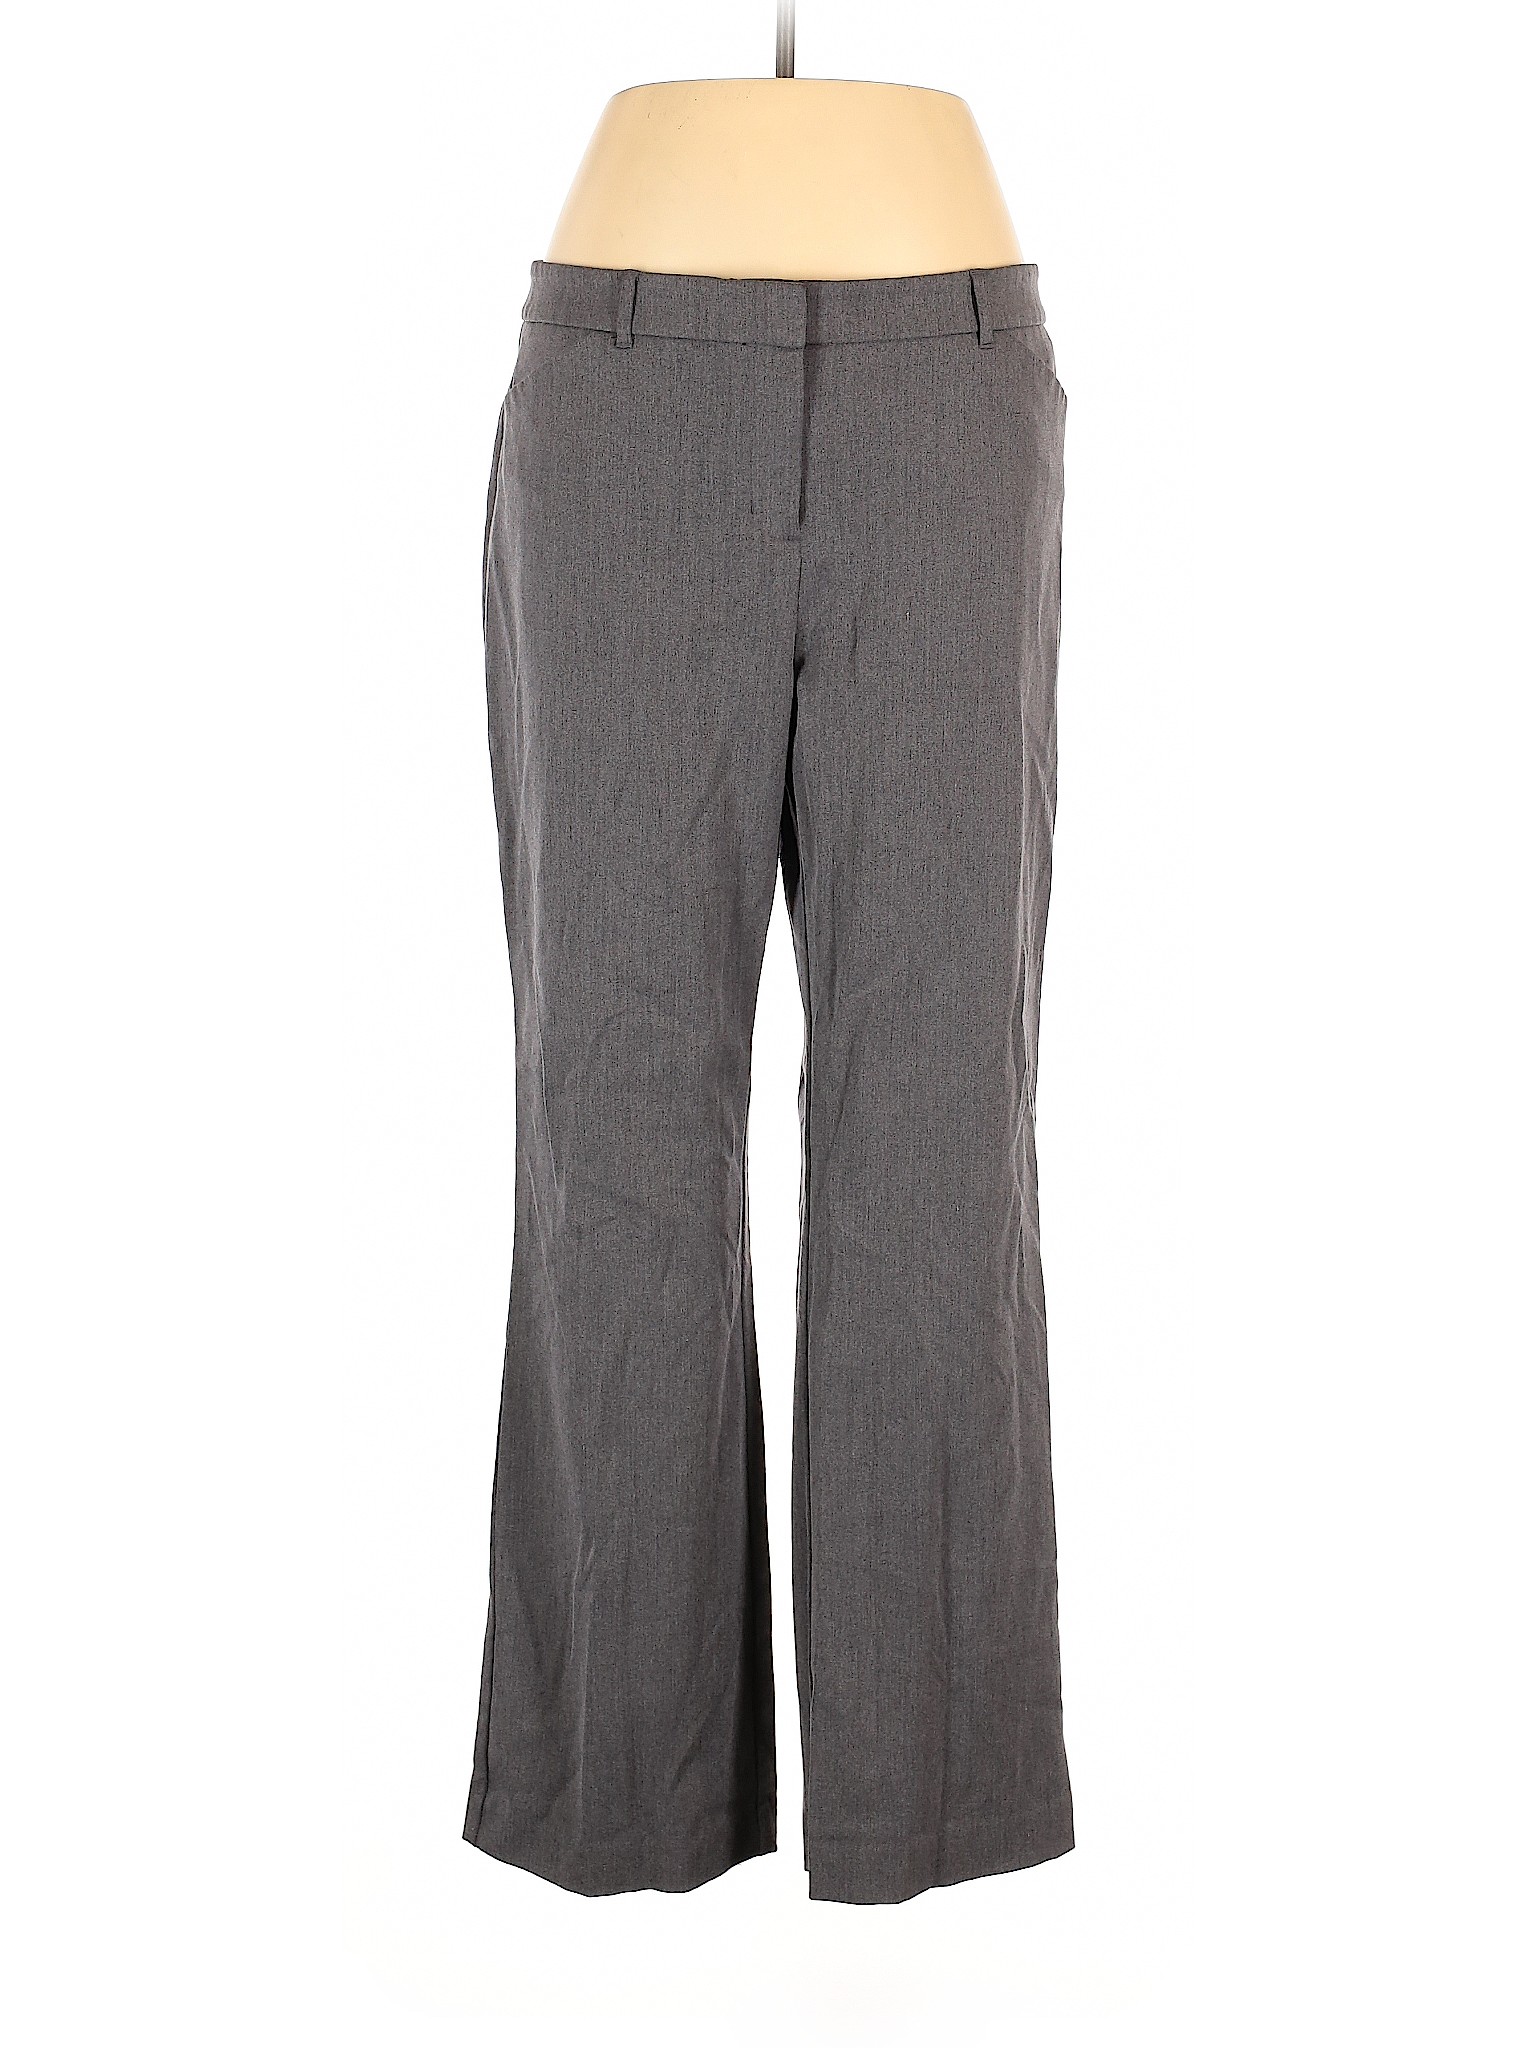 Maurices Women Gray Dress Pants 13 | eBay